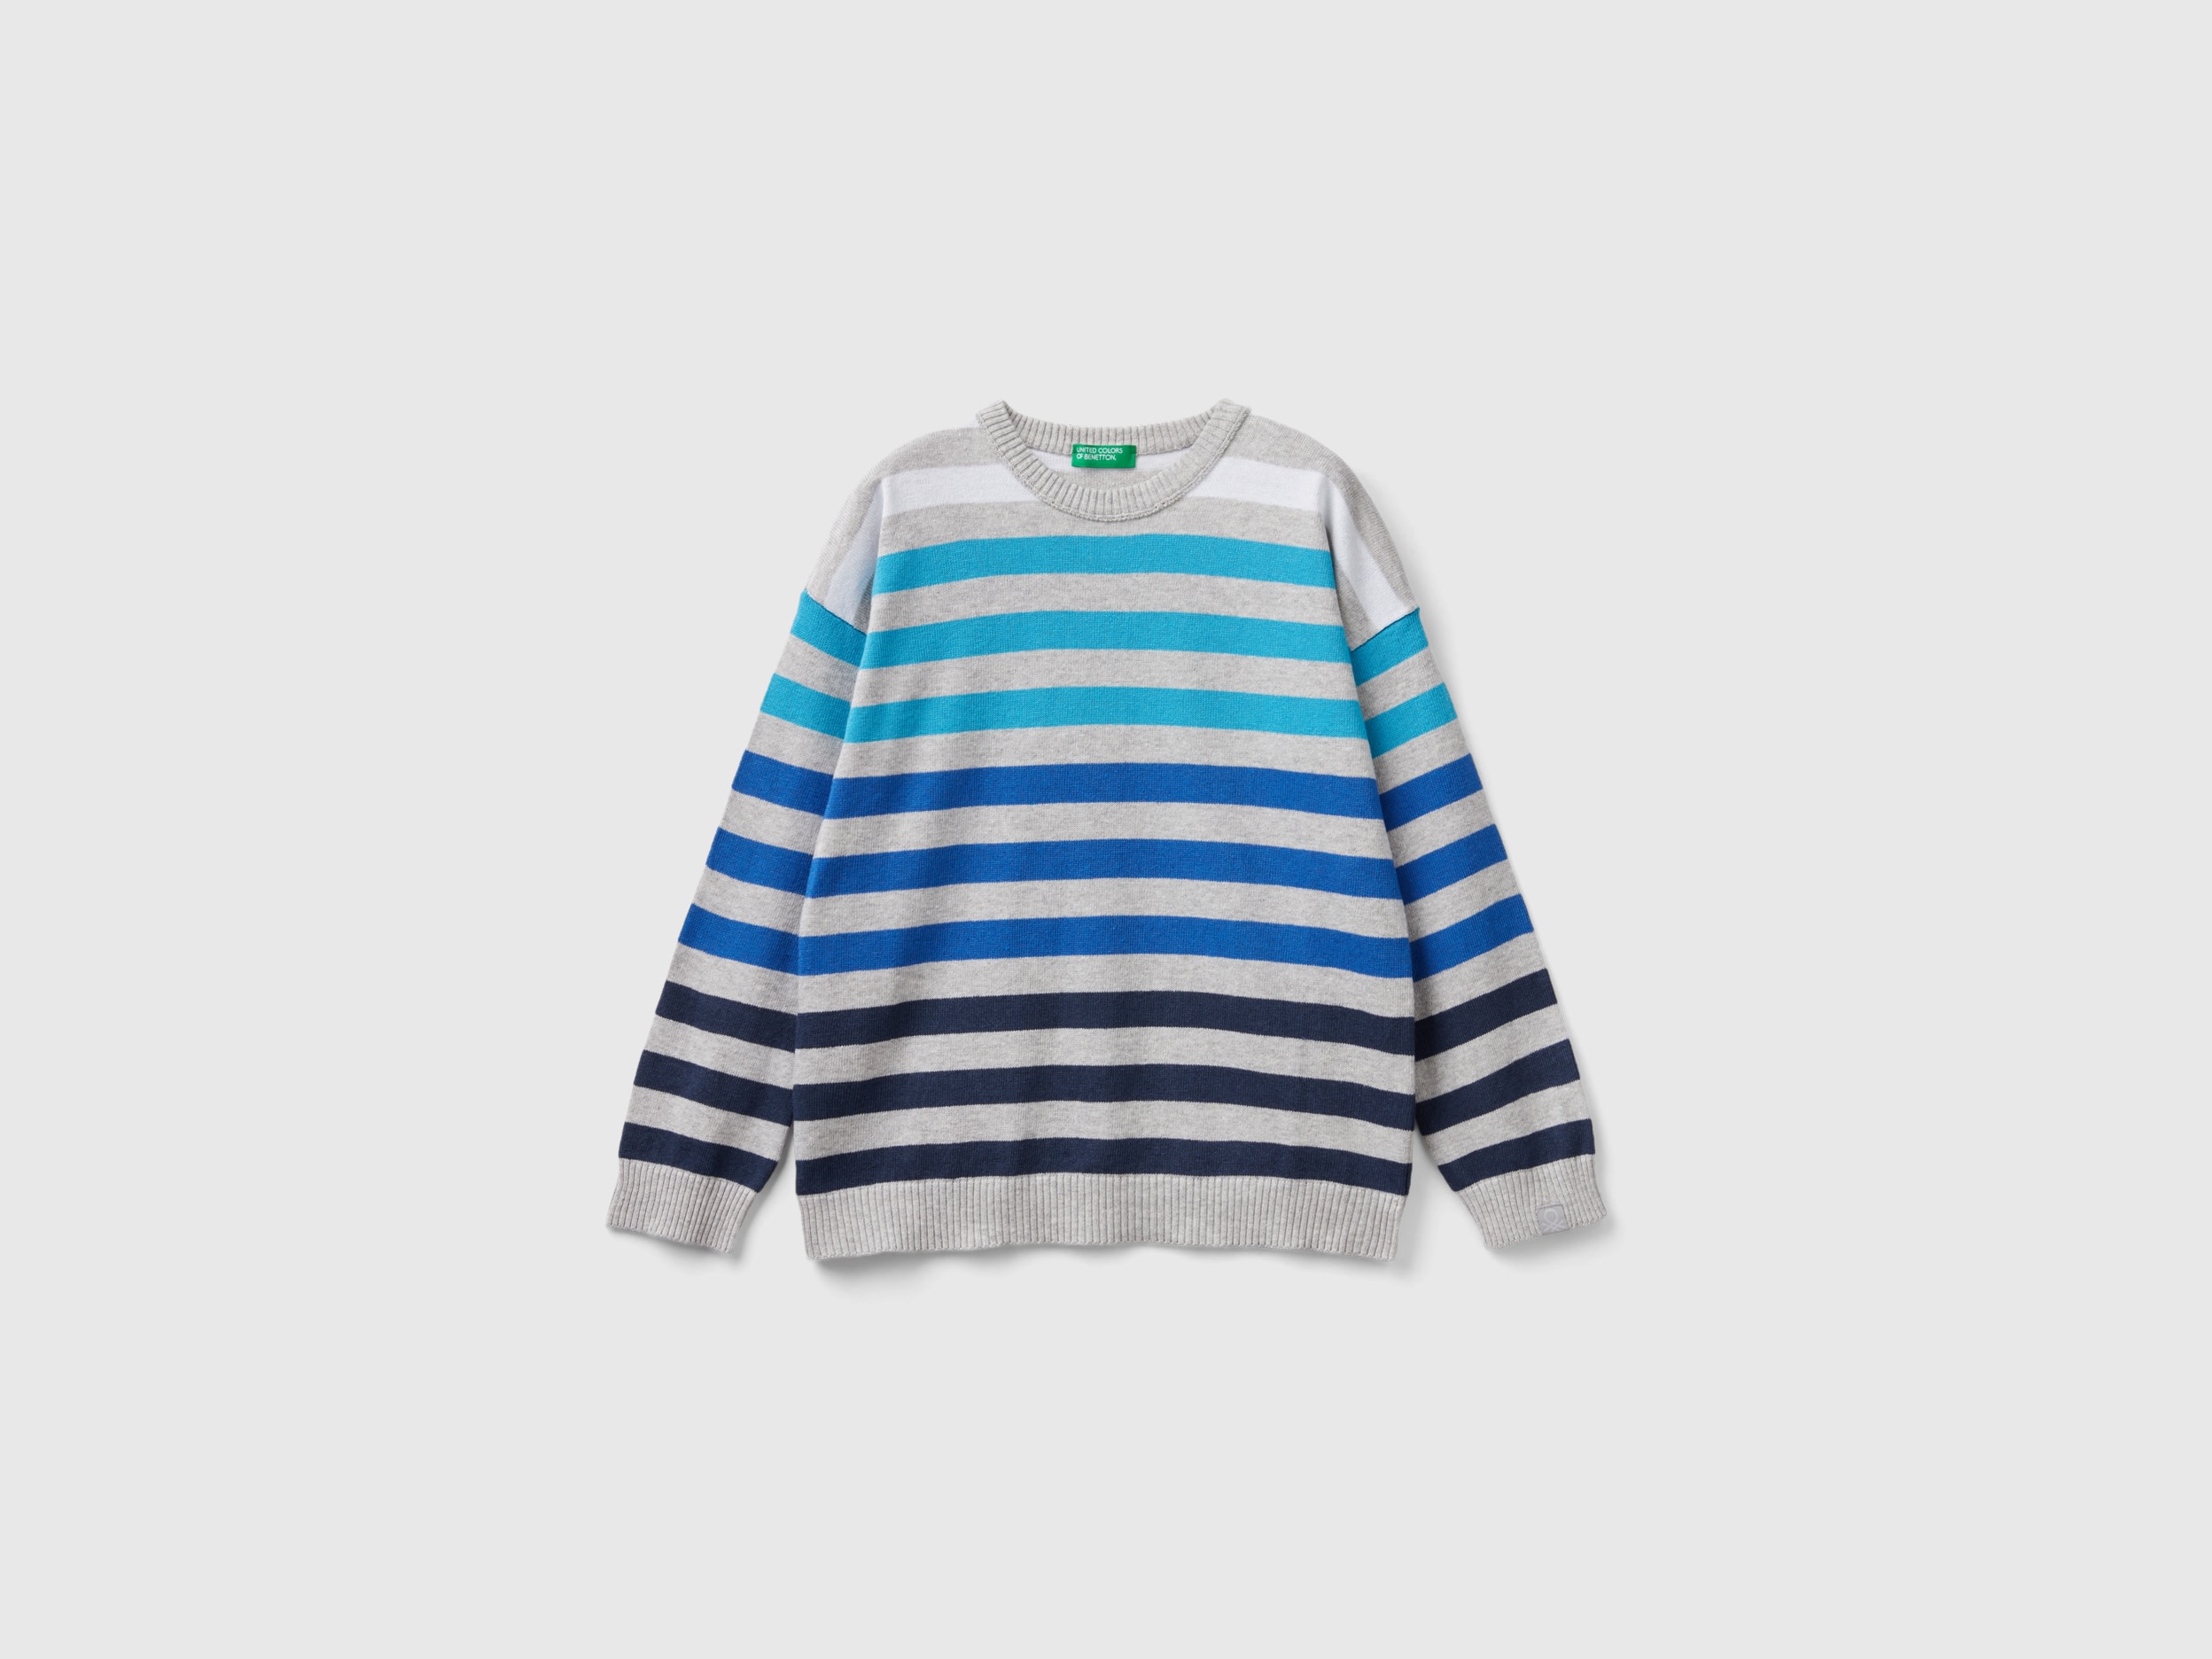 Benetton, Striped Sweater, size 3XL, Light Gray, Kids